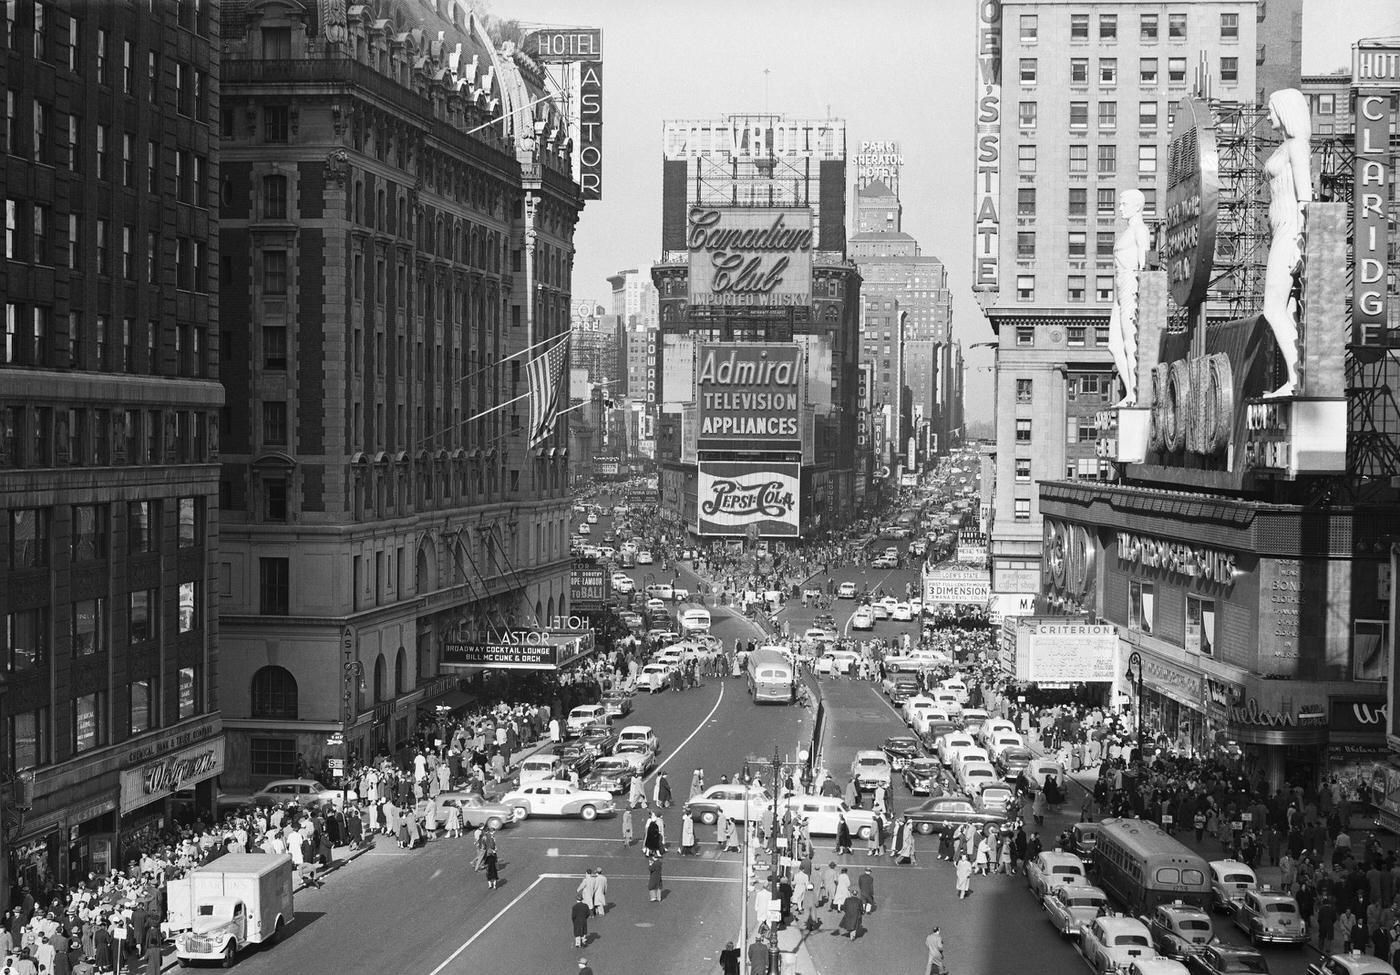 People Jam Sidewalks In Times Square Celebrating George Washington'S Birthday, Manhattan, 1953